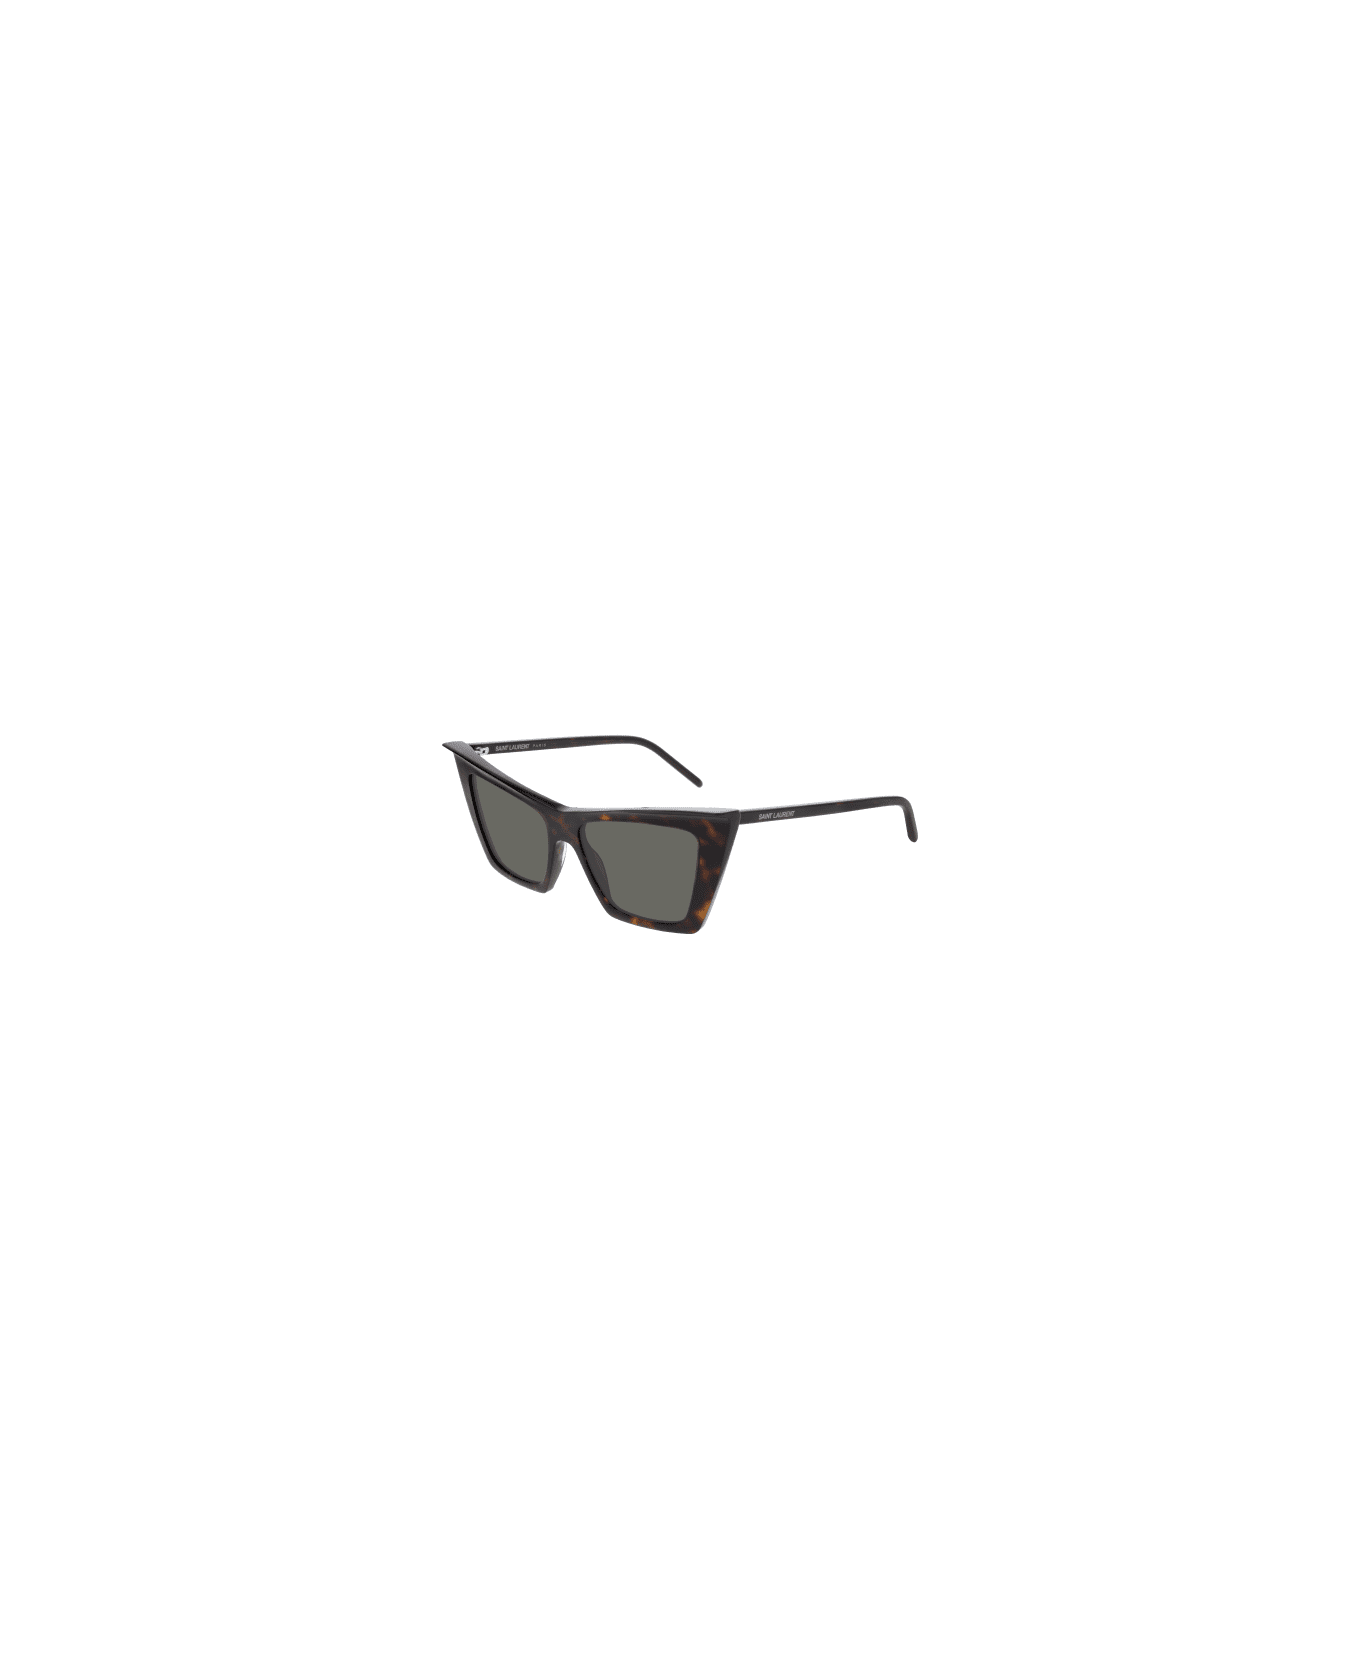 Saint Laurent Eyewear sl 372 003 FRAME Sunglasses - Tortoise